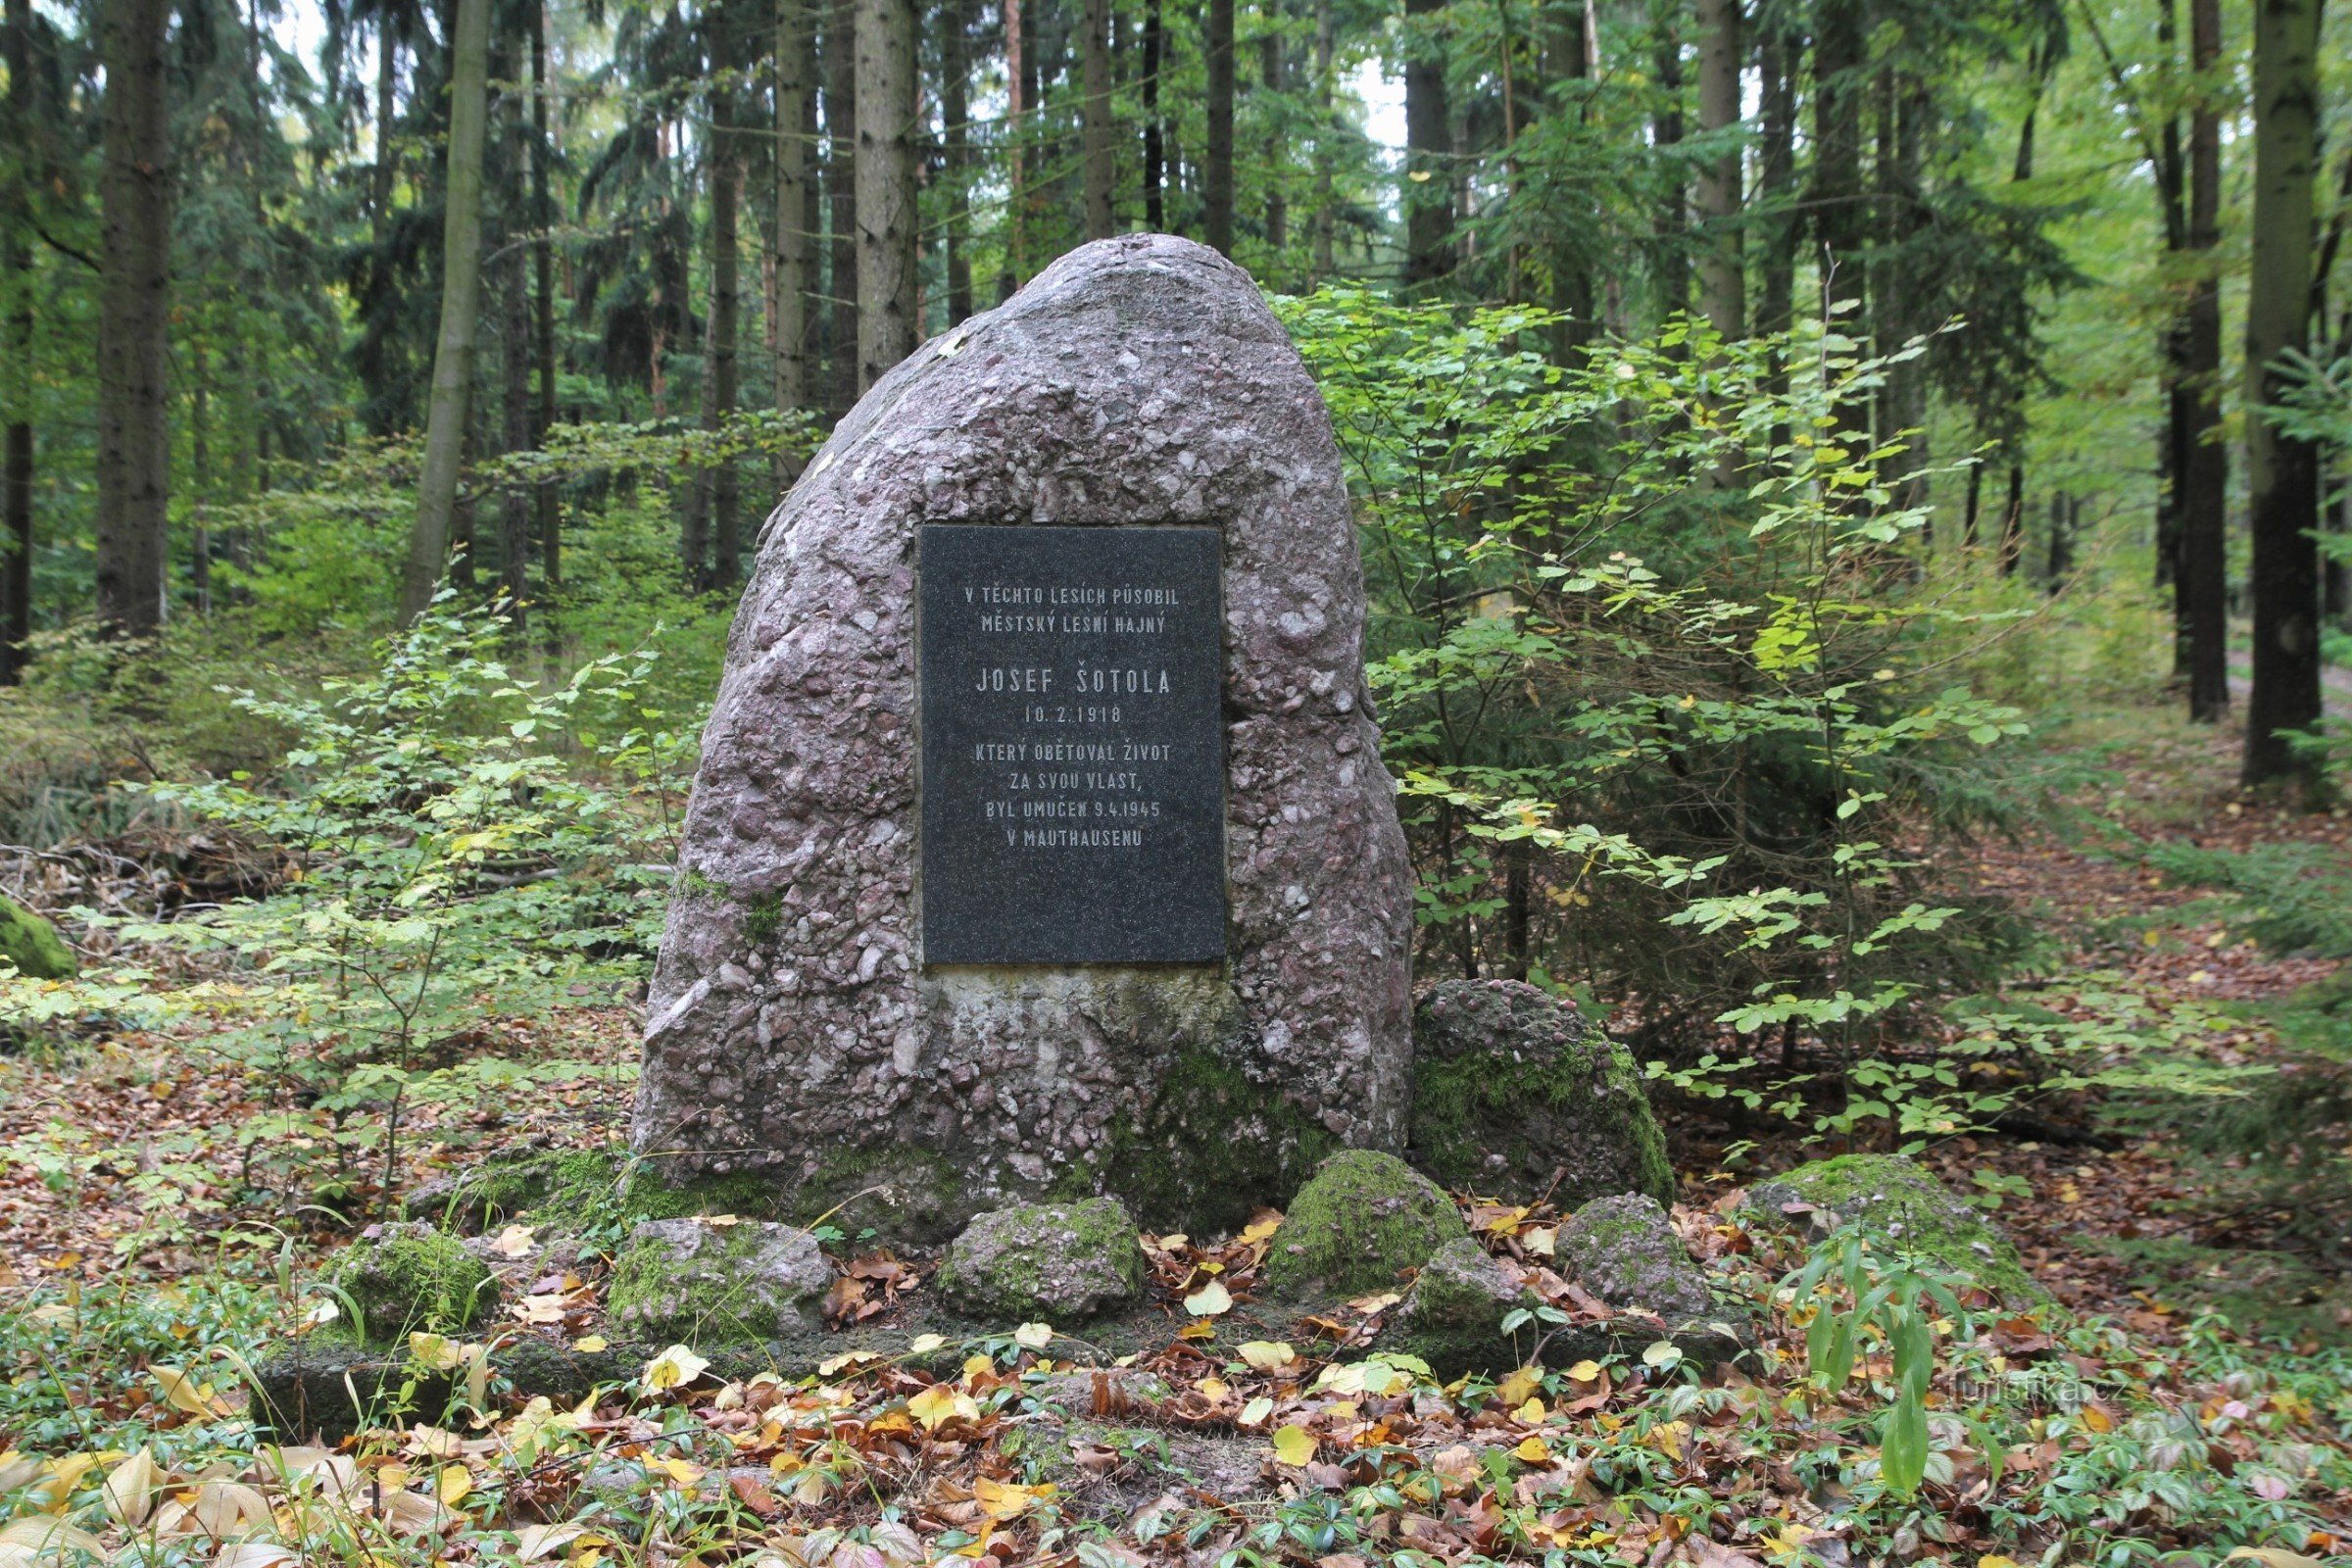 Josef Šotola emlékműve